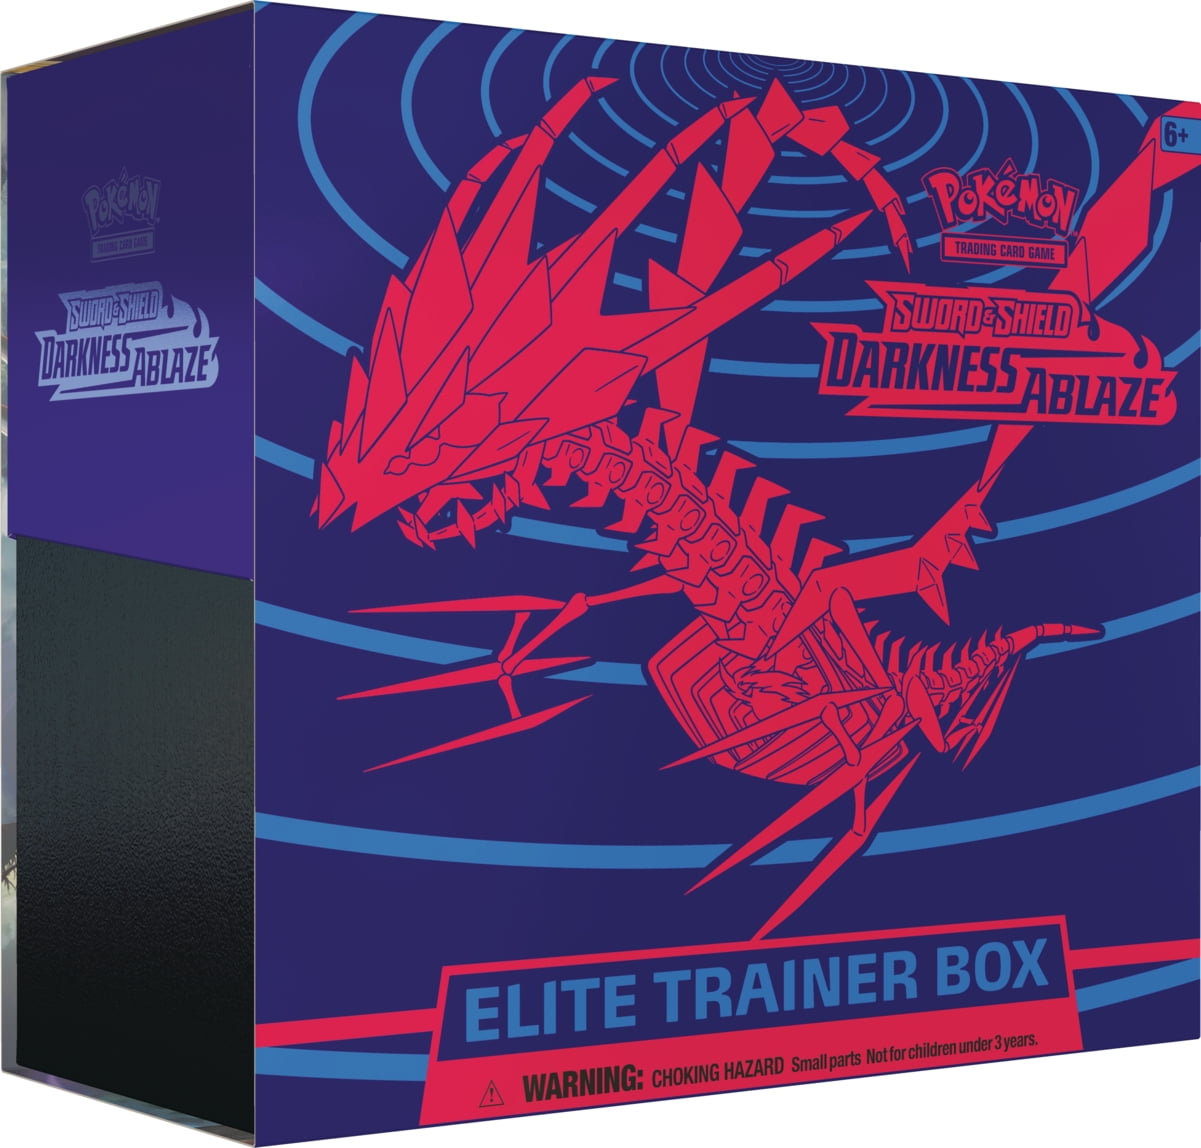 Pokemon TCG Sword & Shield 3 Darkness Ablaze Elite Trainer Box for sale online 